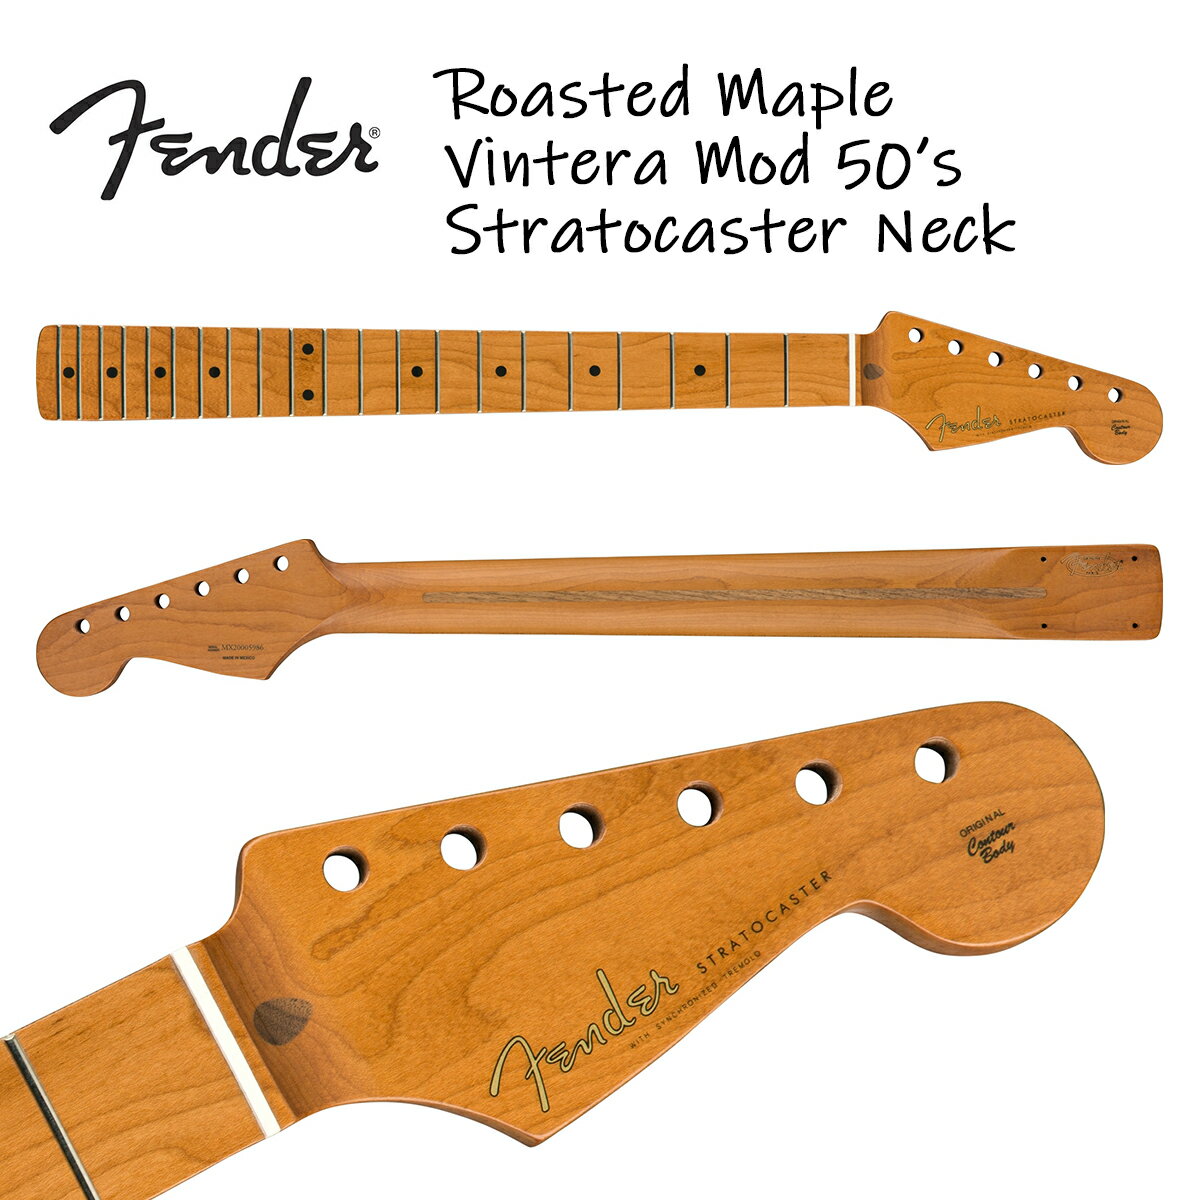 Fender Roasted Maple Vintera Mod 50 039 s Stratocaster Neck 21 Medium Jumbo Frets 9.5 V Shape 新品 フェンダー ストラトキャスター Mexico,メキシコ製 ネック ローステッドメイプル ギターパーツ